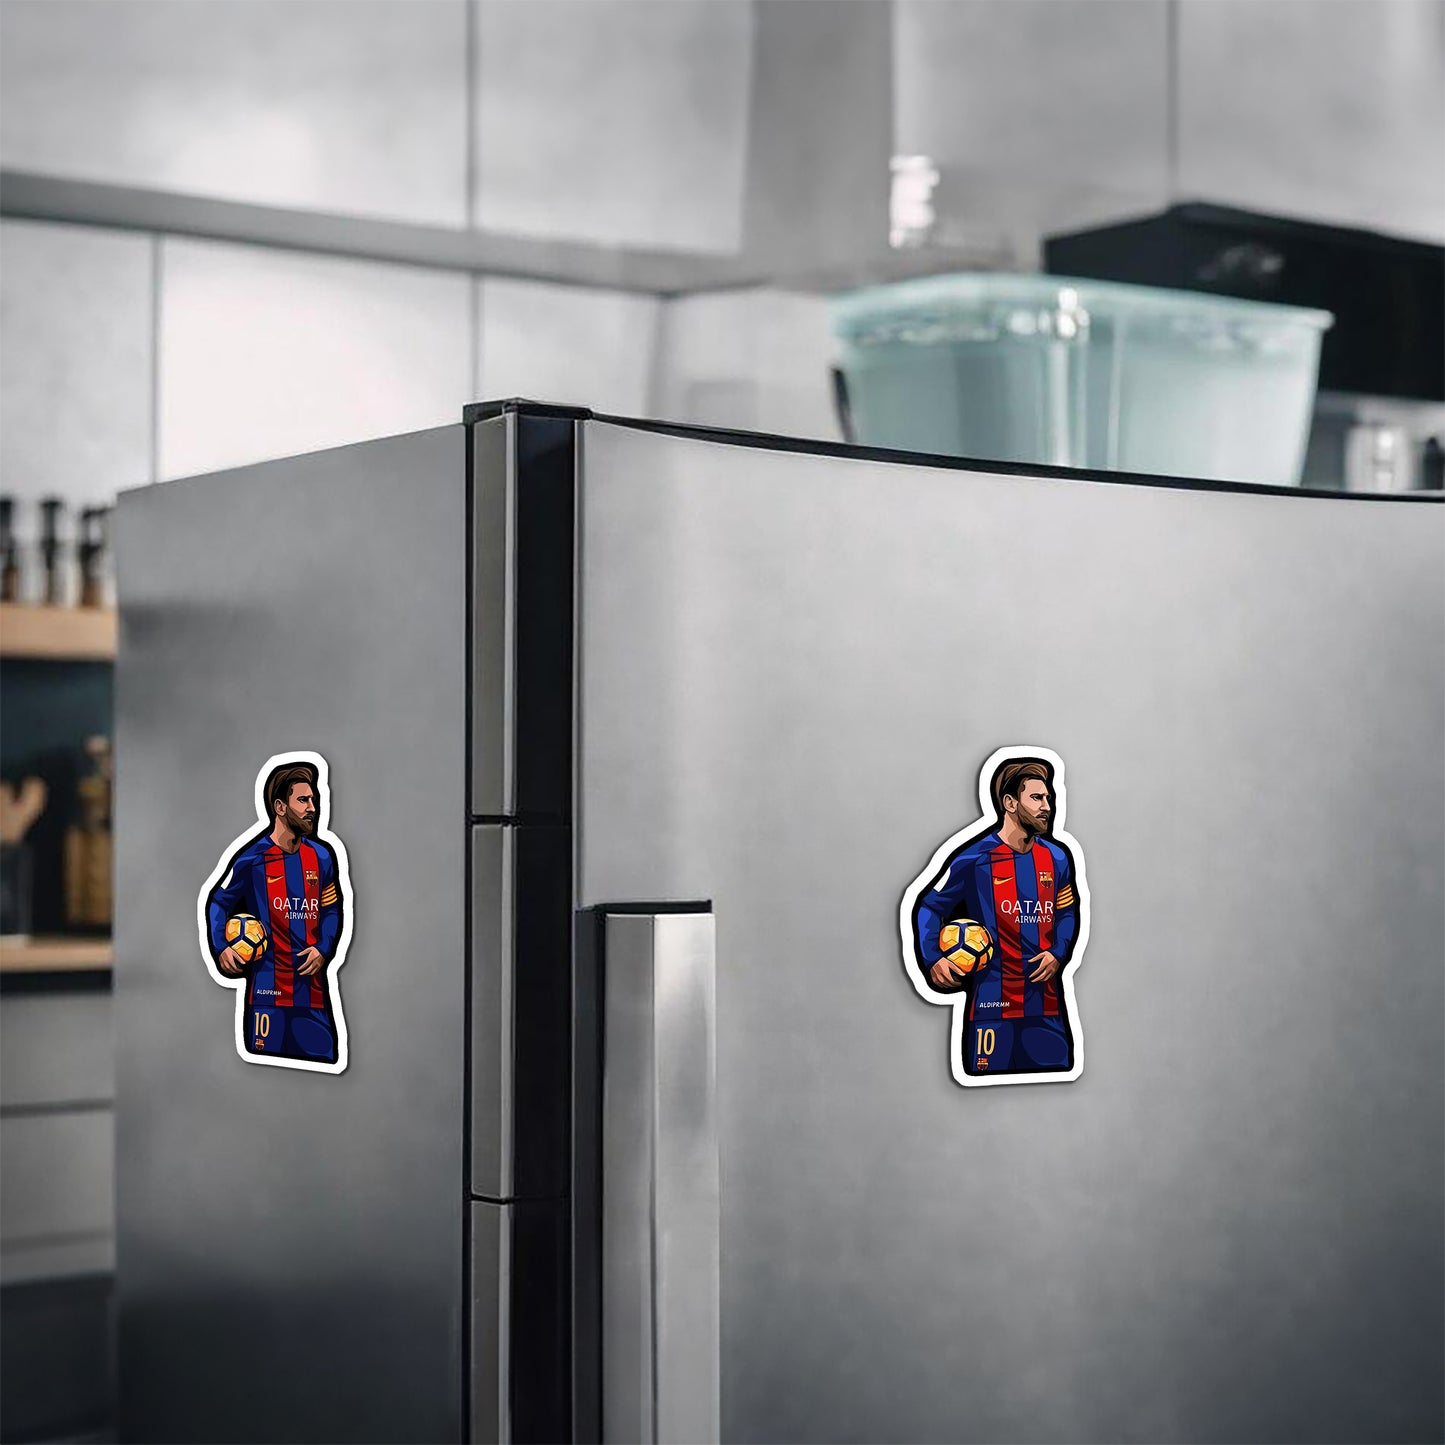 Barca Messi Magnetic Sticker